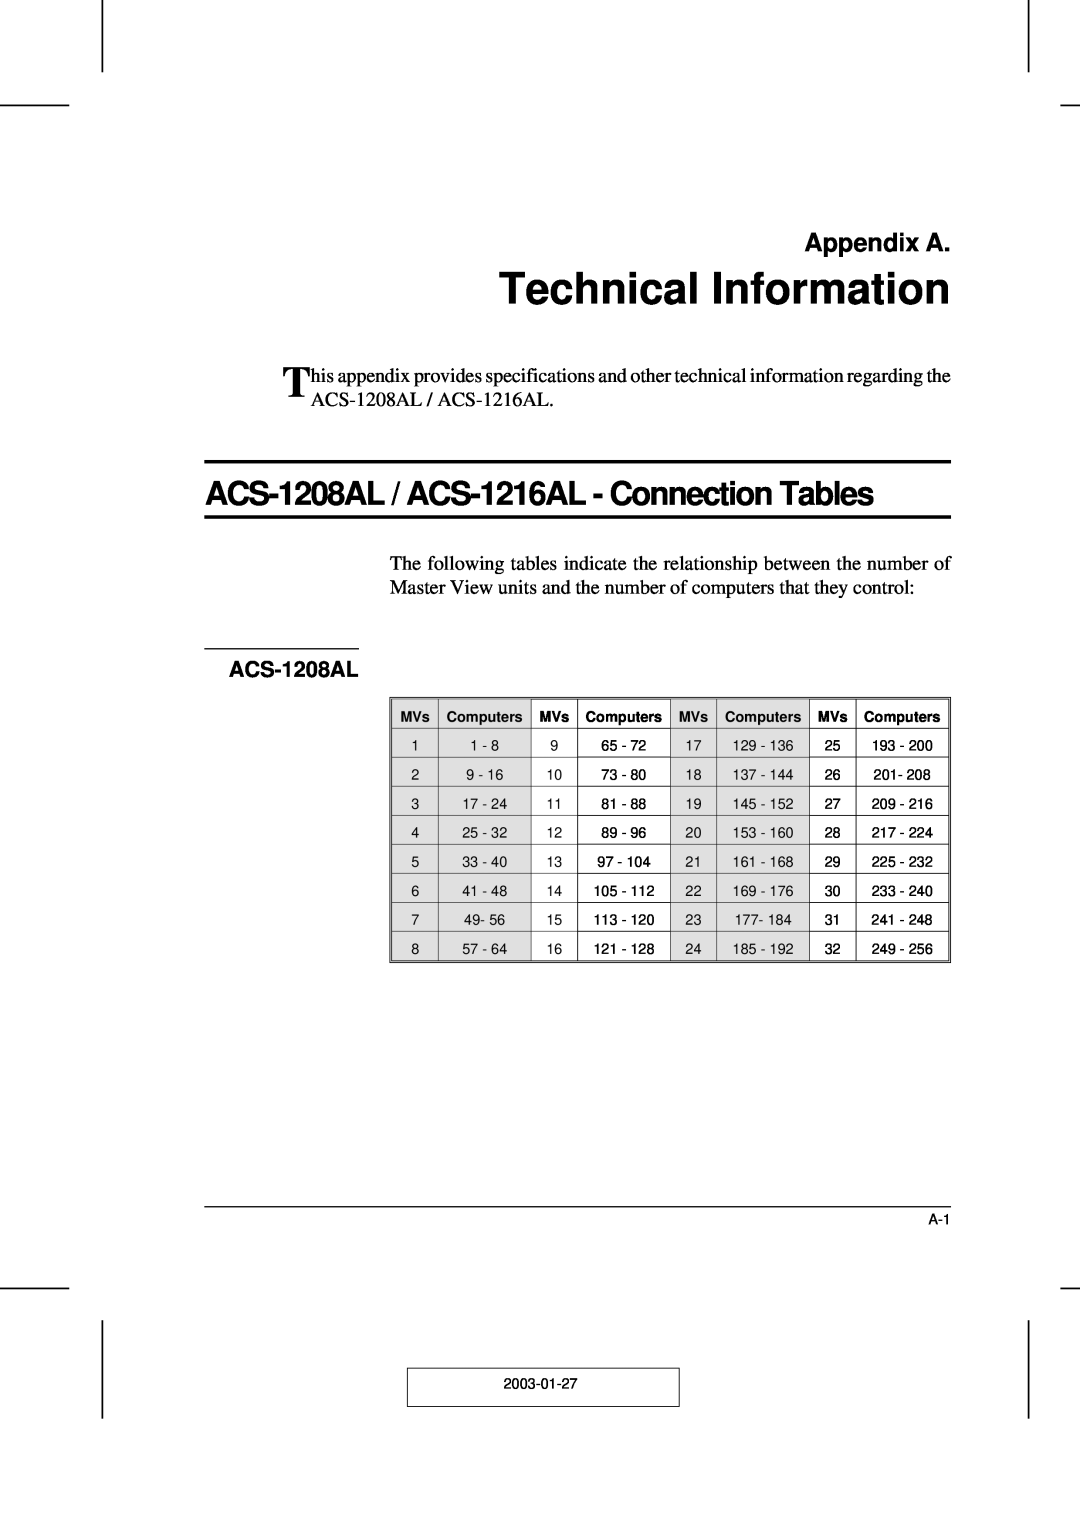 ATEN Technology user manual Technical Information, ACS-1208AL / ACS-1216AL - Connection Tables, Appendix A 